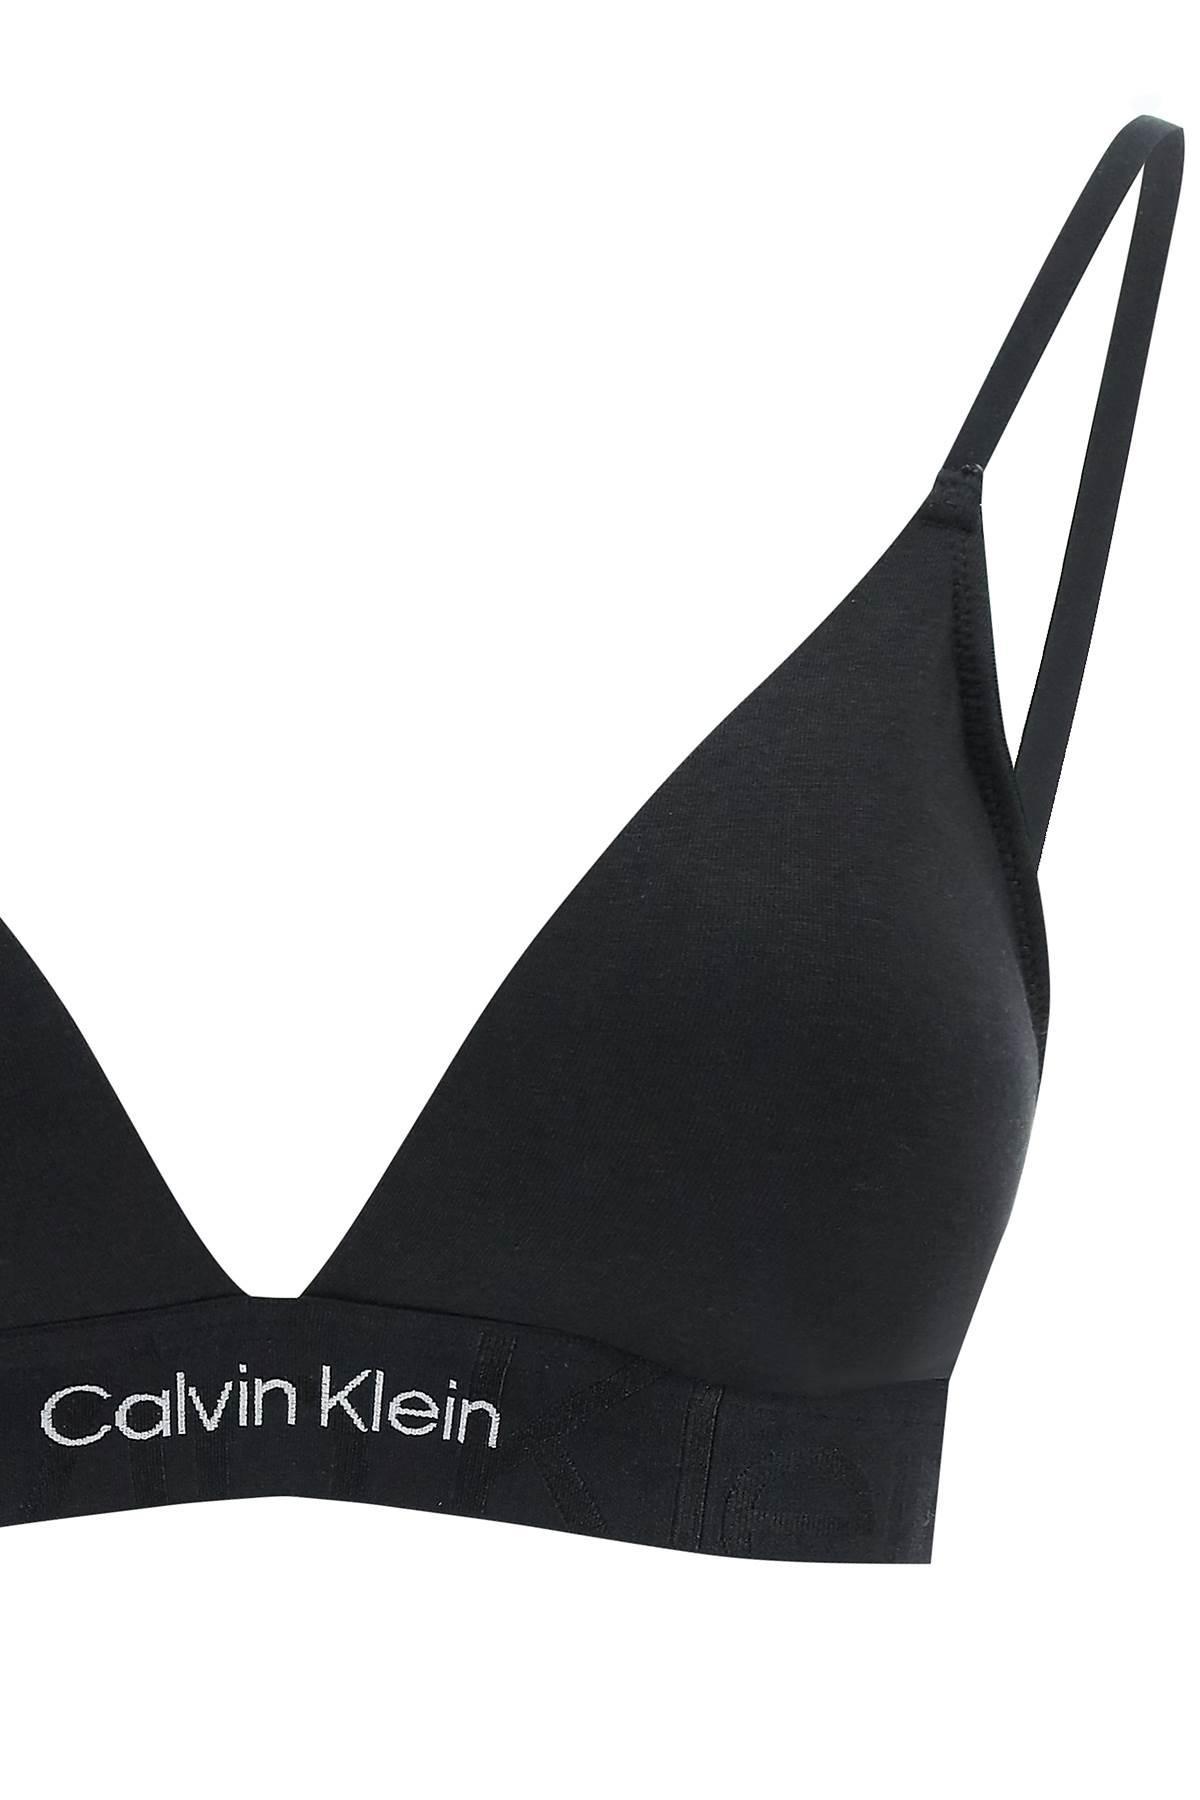 Calvin Klein Embossed Icon Triangle Bra in Black